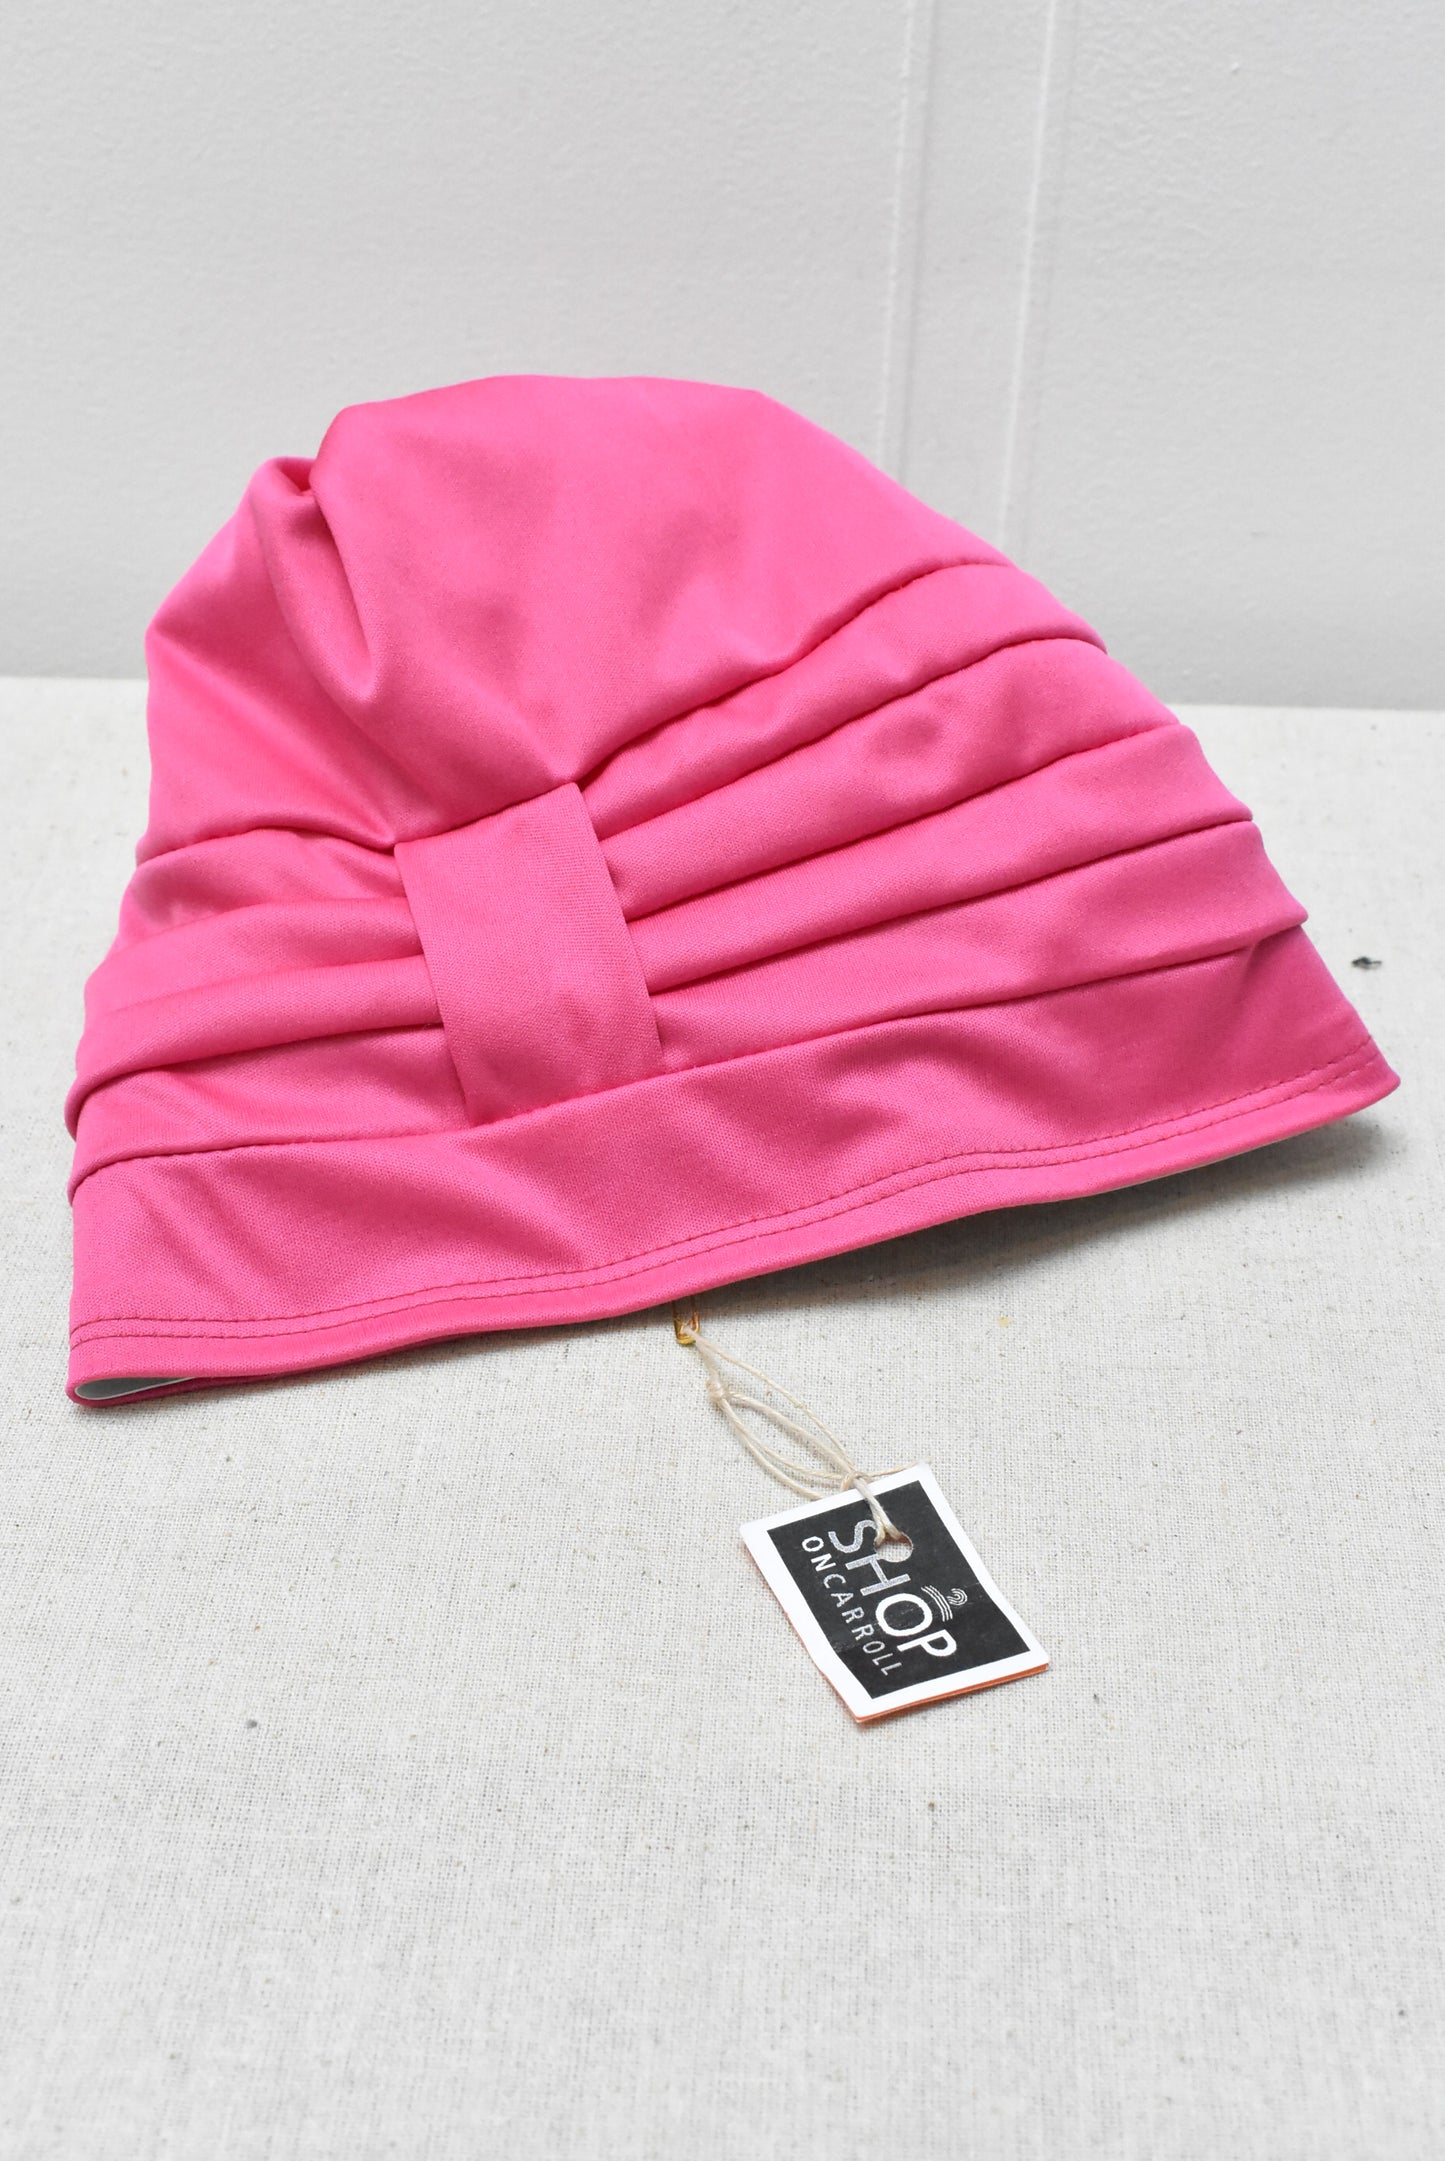 Vintage pink turban shower cap